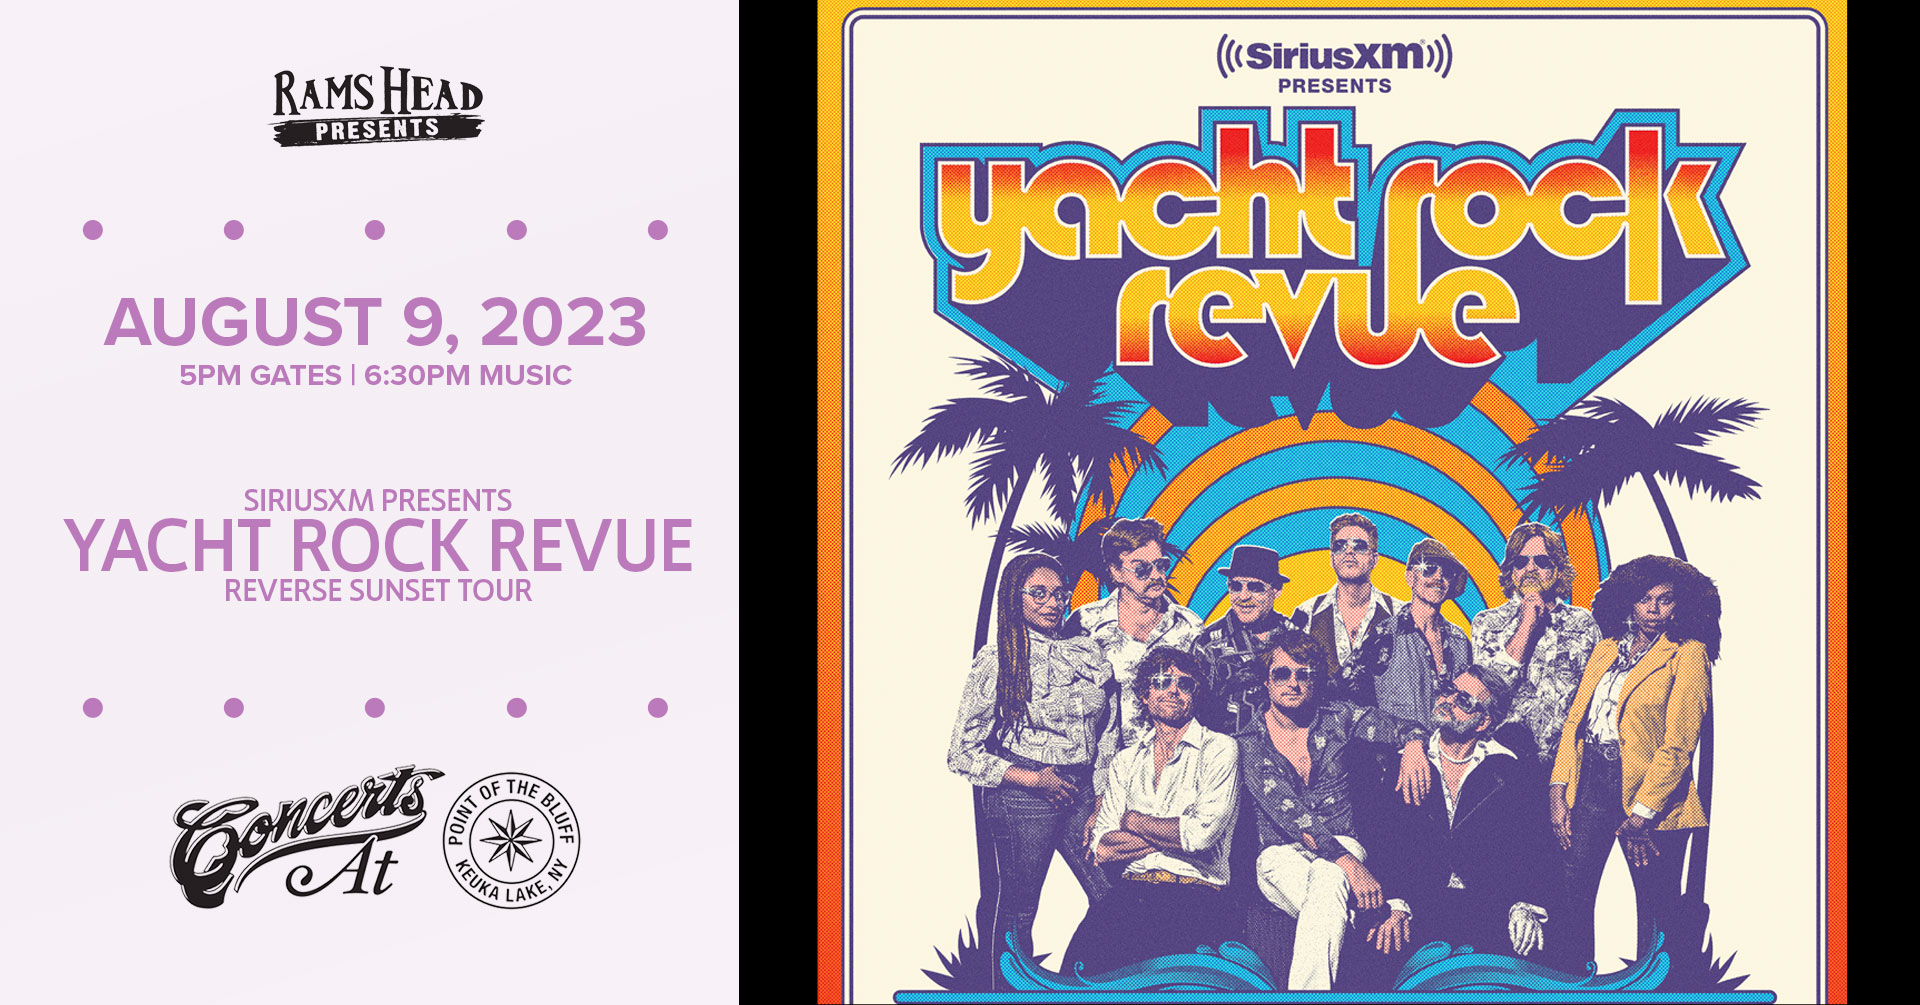 siriusxm presents yacht rock revue